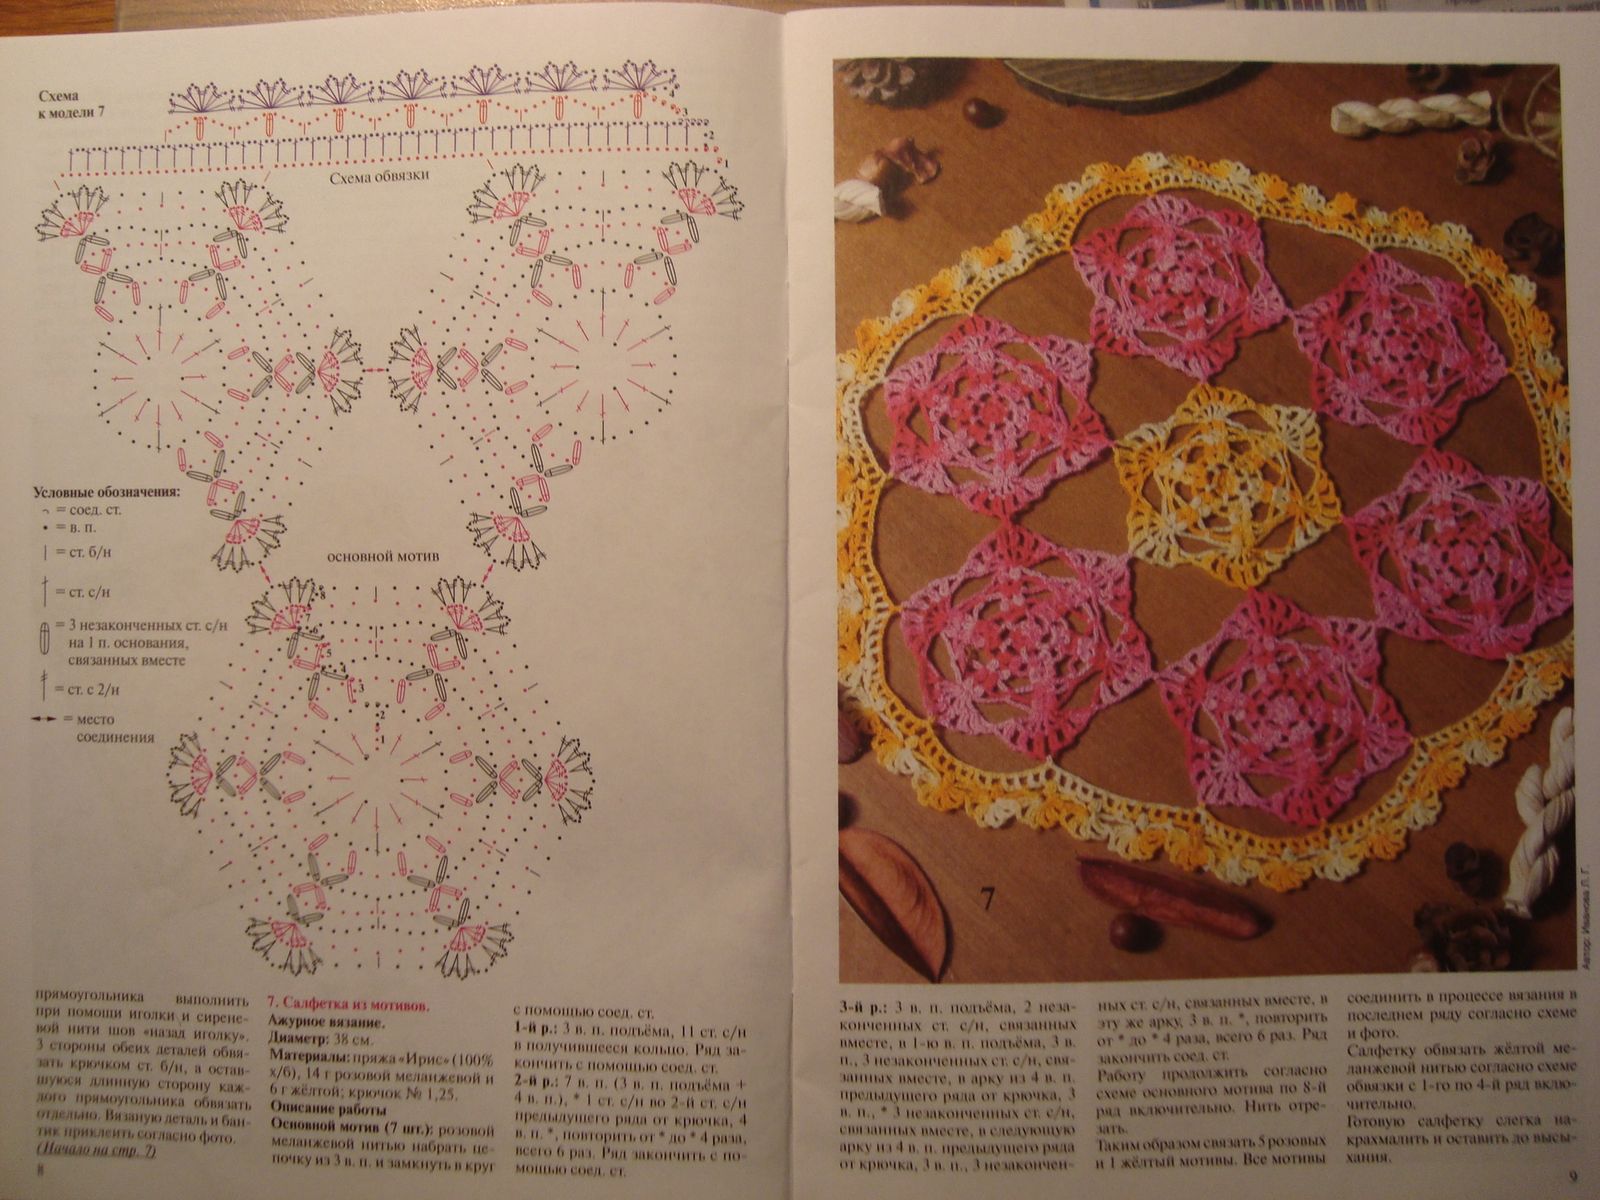 doily crochet round colored hexagonal tiles